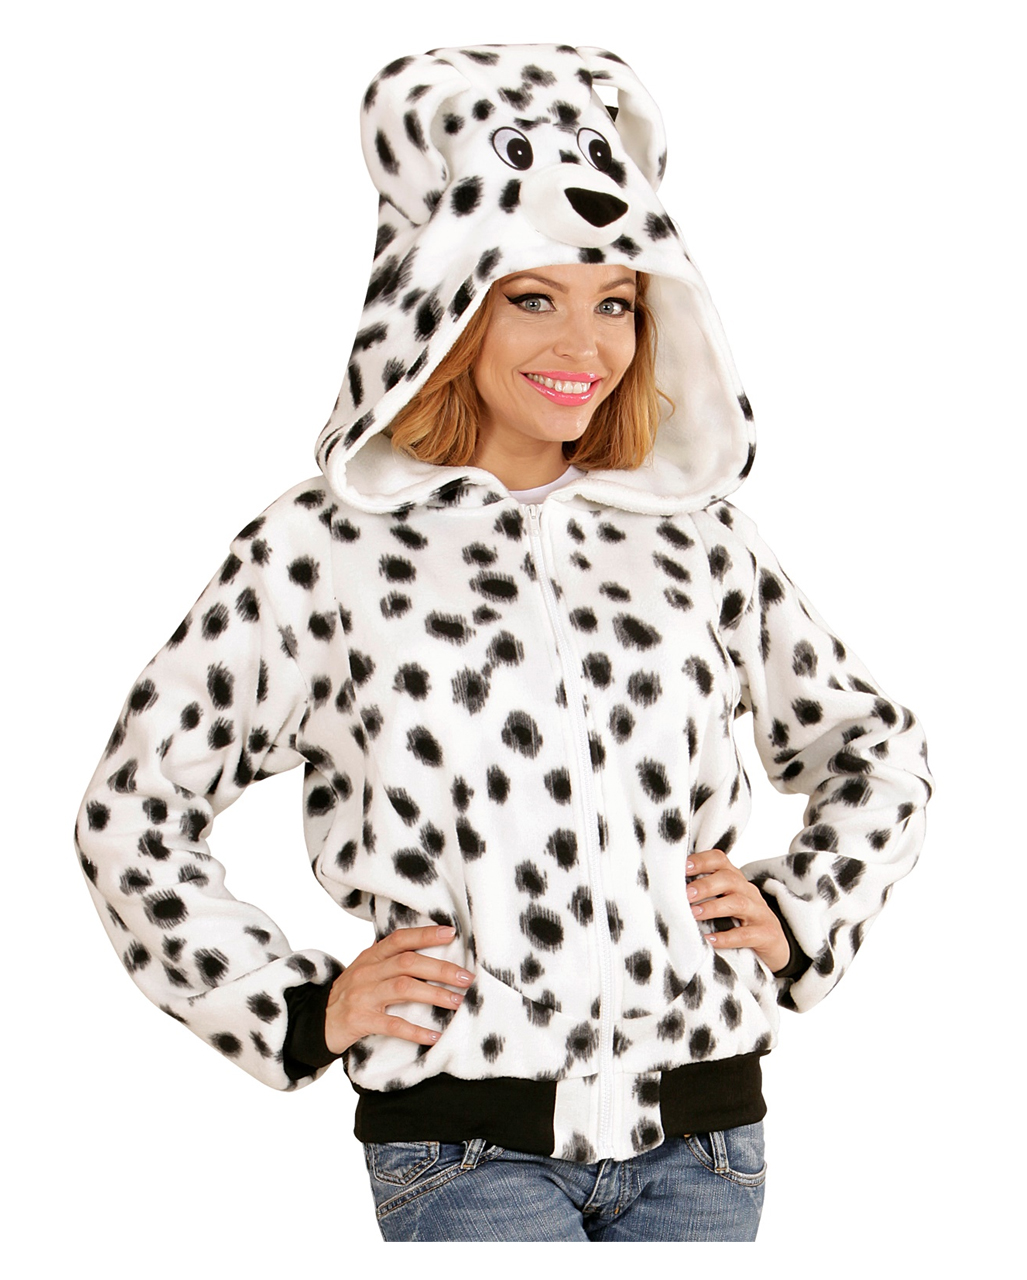 Dalmatian Costume Jacket | Costume Accessories | Horror-Shop.com